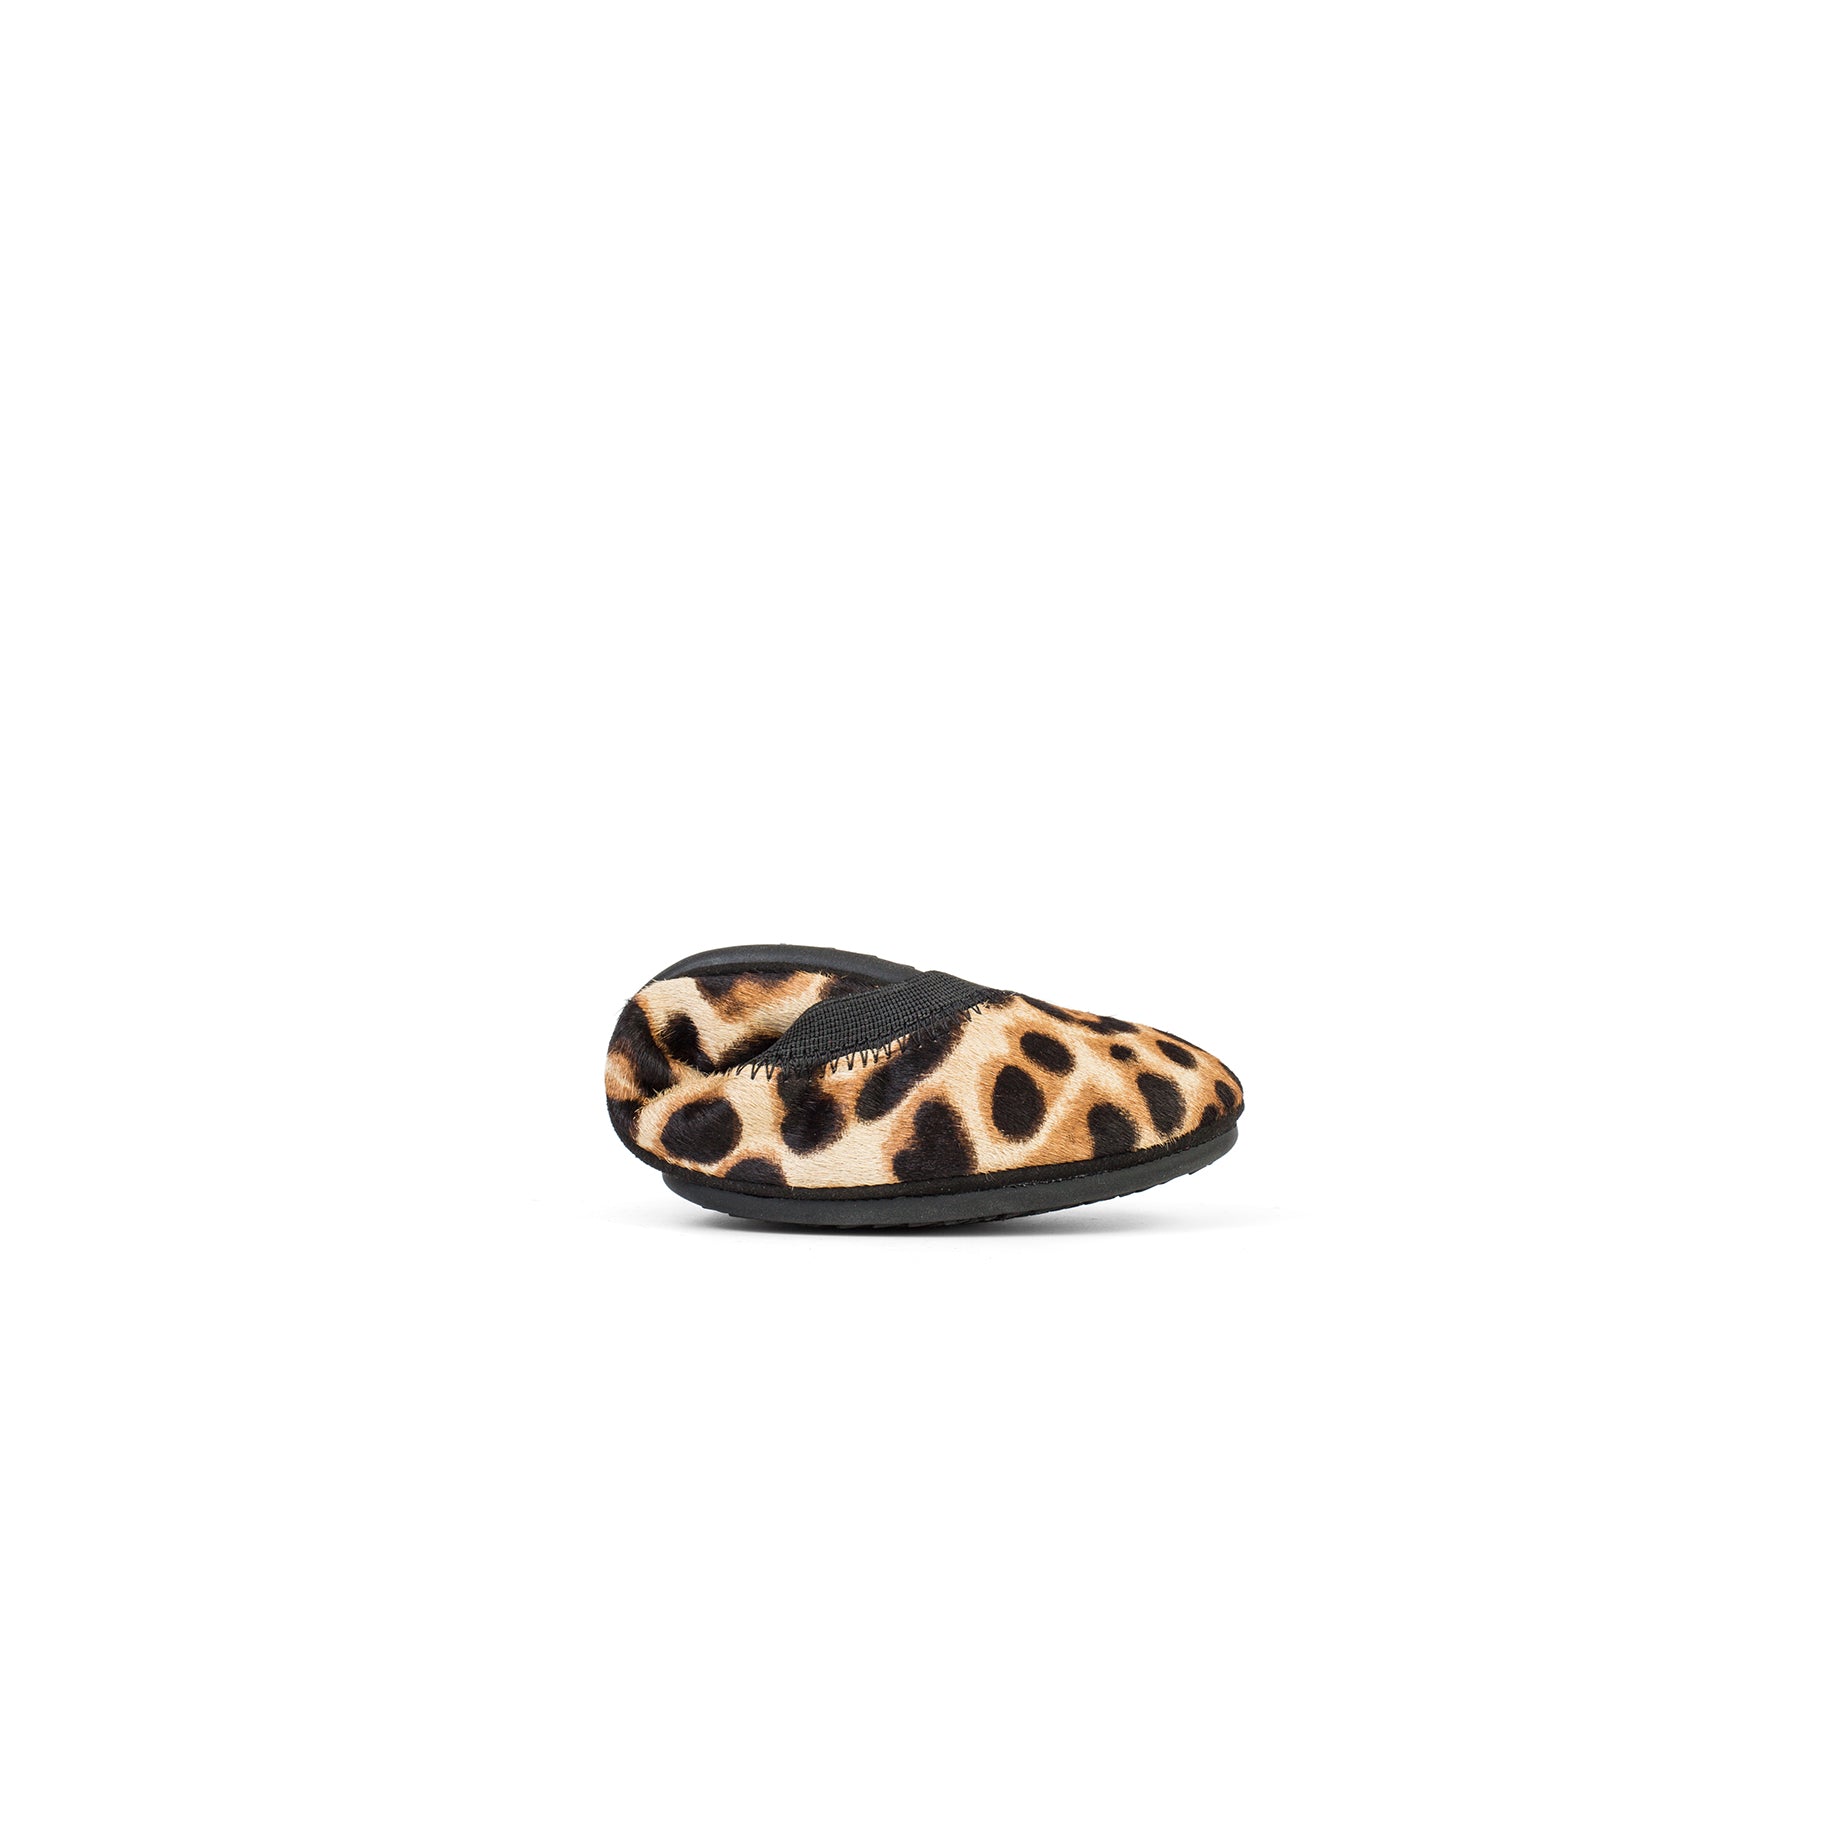 Samara Tan Leopard Calf Hair Ballet Flat